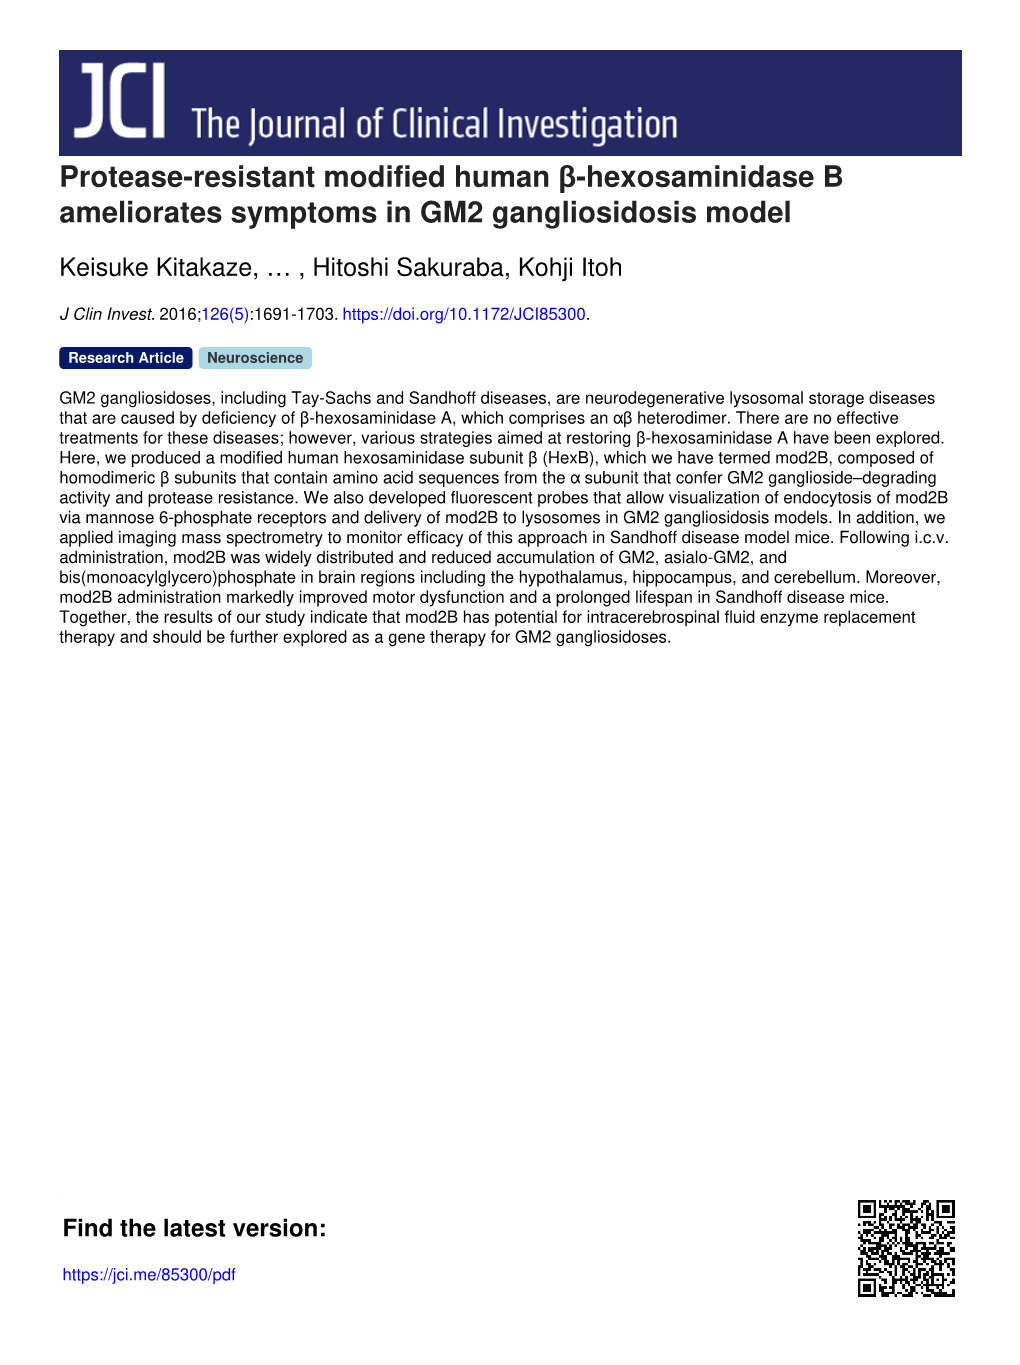 Protease-Resistant Modified Human Β-Hexosaminidase B Ameliorates Symptoms in GM2 Gangliosidosis Model